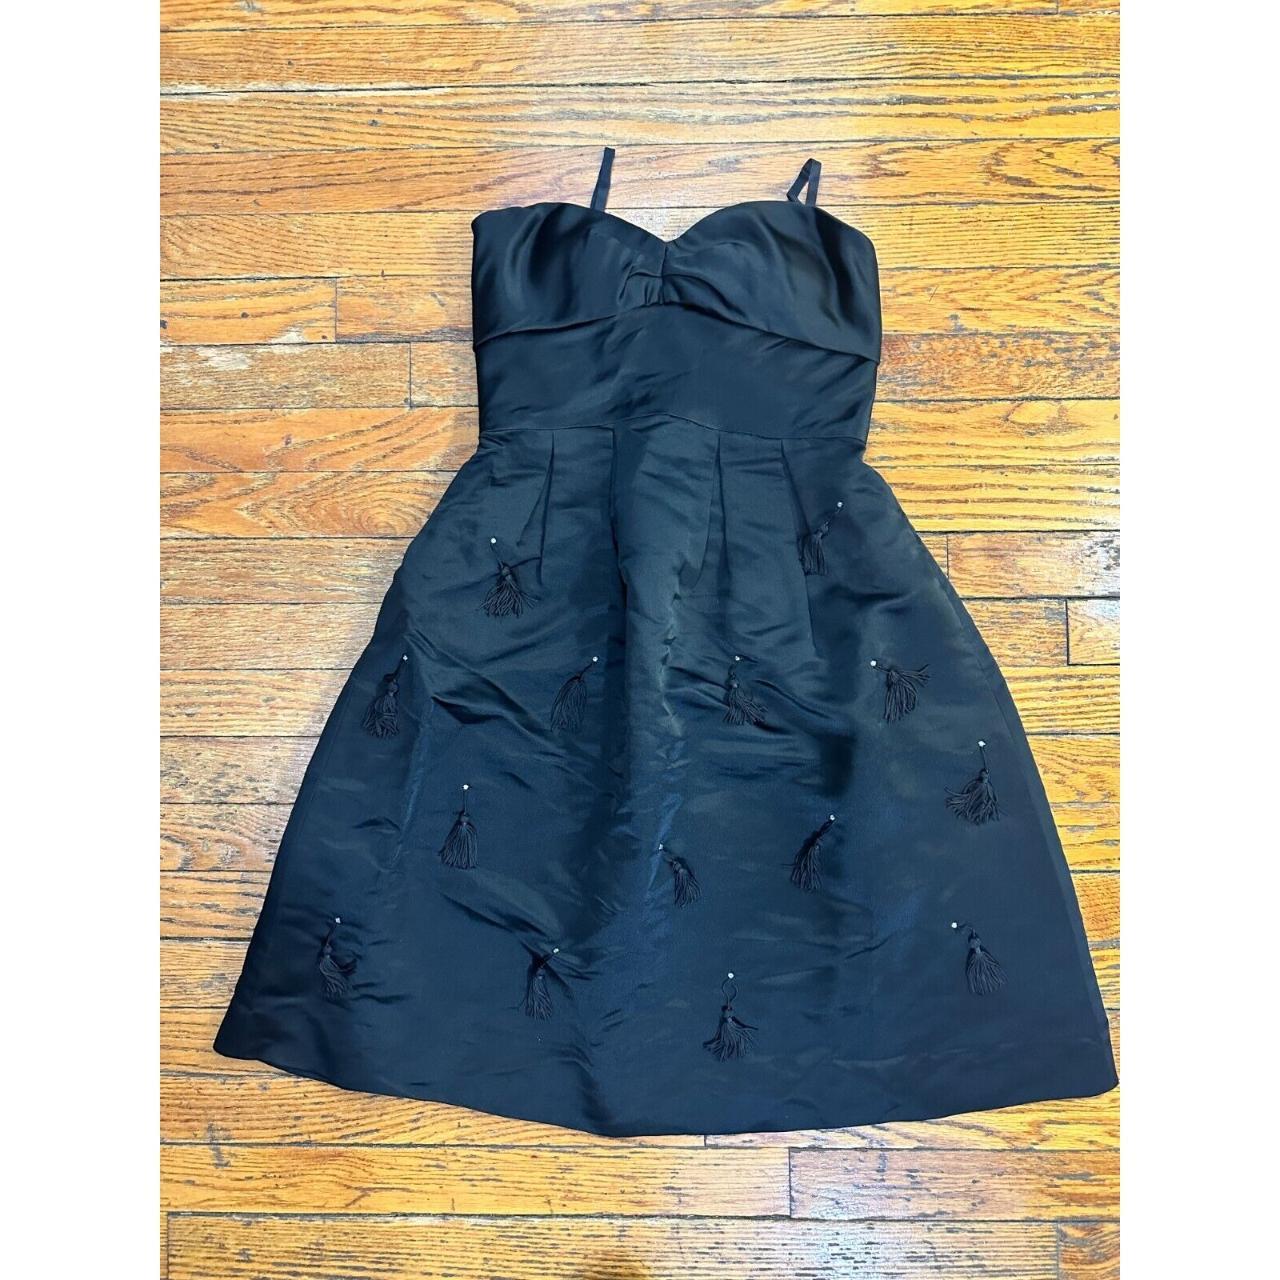 Vivienne Tam 100% Silk Mini Dress Color black size 4... - Depop